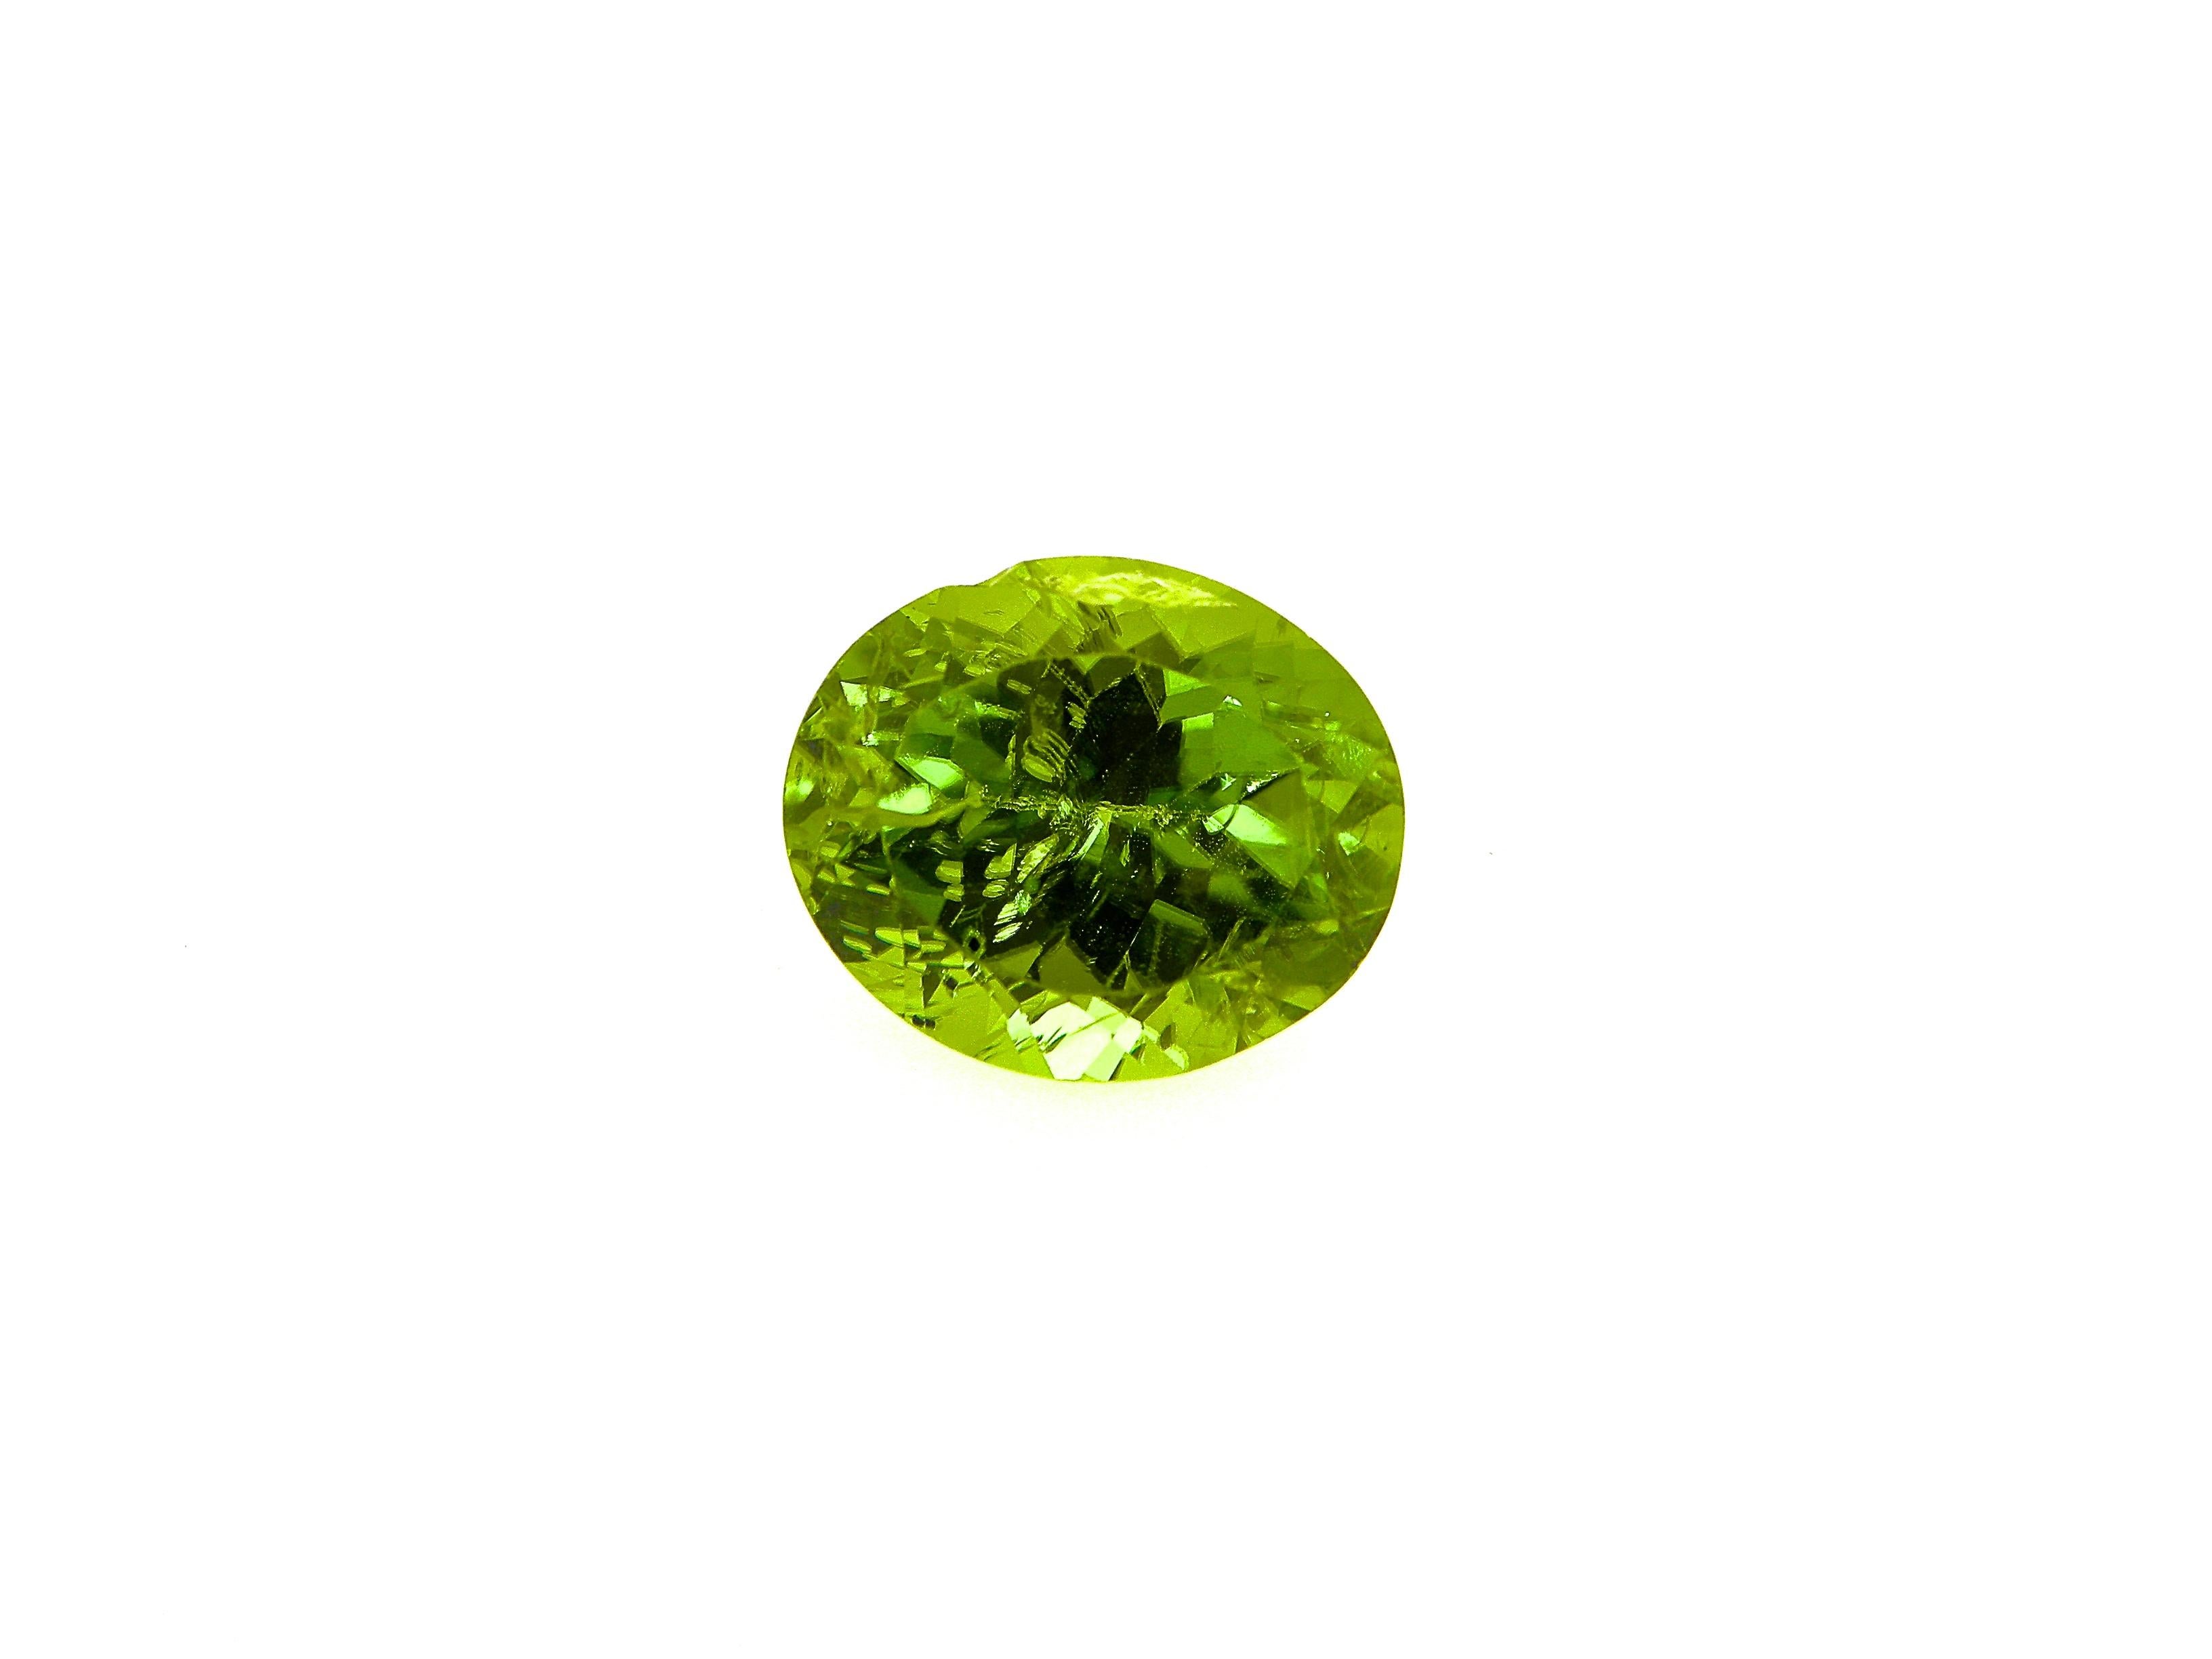 7.36 Carat Natural Unheated Oval-Cut Burmese Vivid Green Peridot:

A gorgeous gem, it is a 7.36 carat unheated oval-cut Burmese vivid green peridot. Hailing from the important Mogok mines in Burma, the peridot possesses a vivid green colour